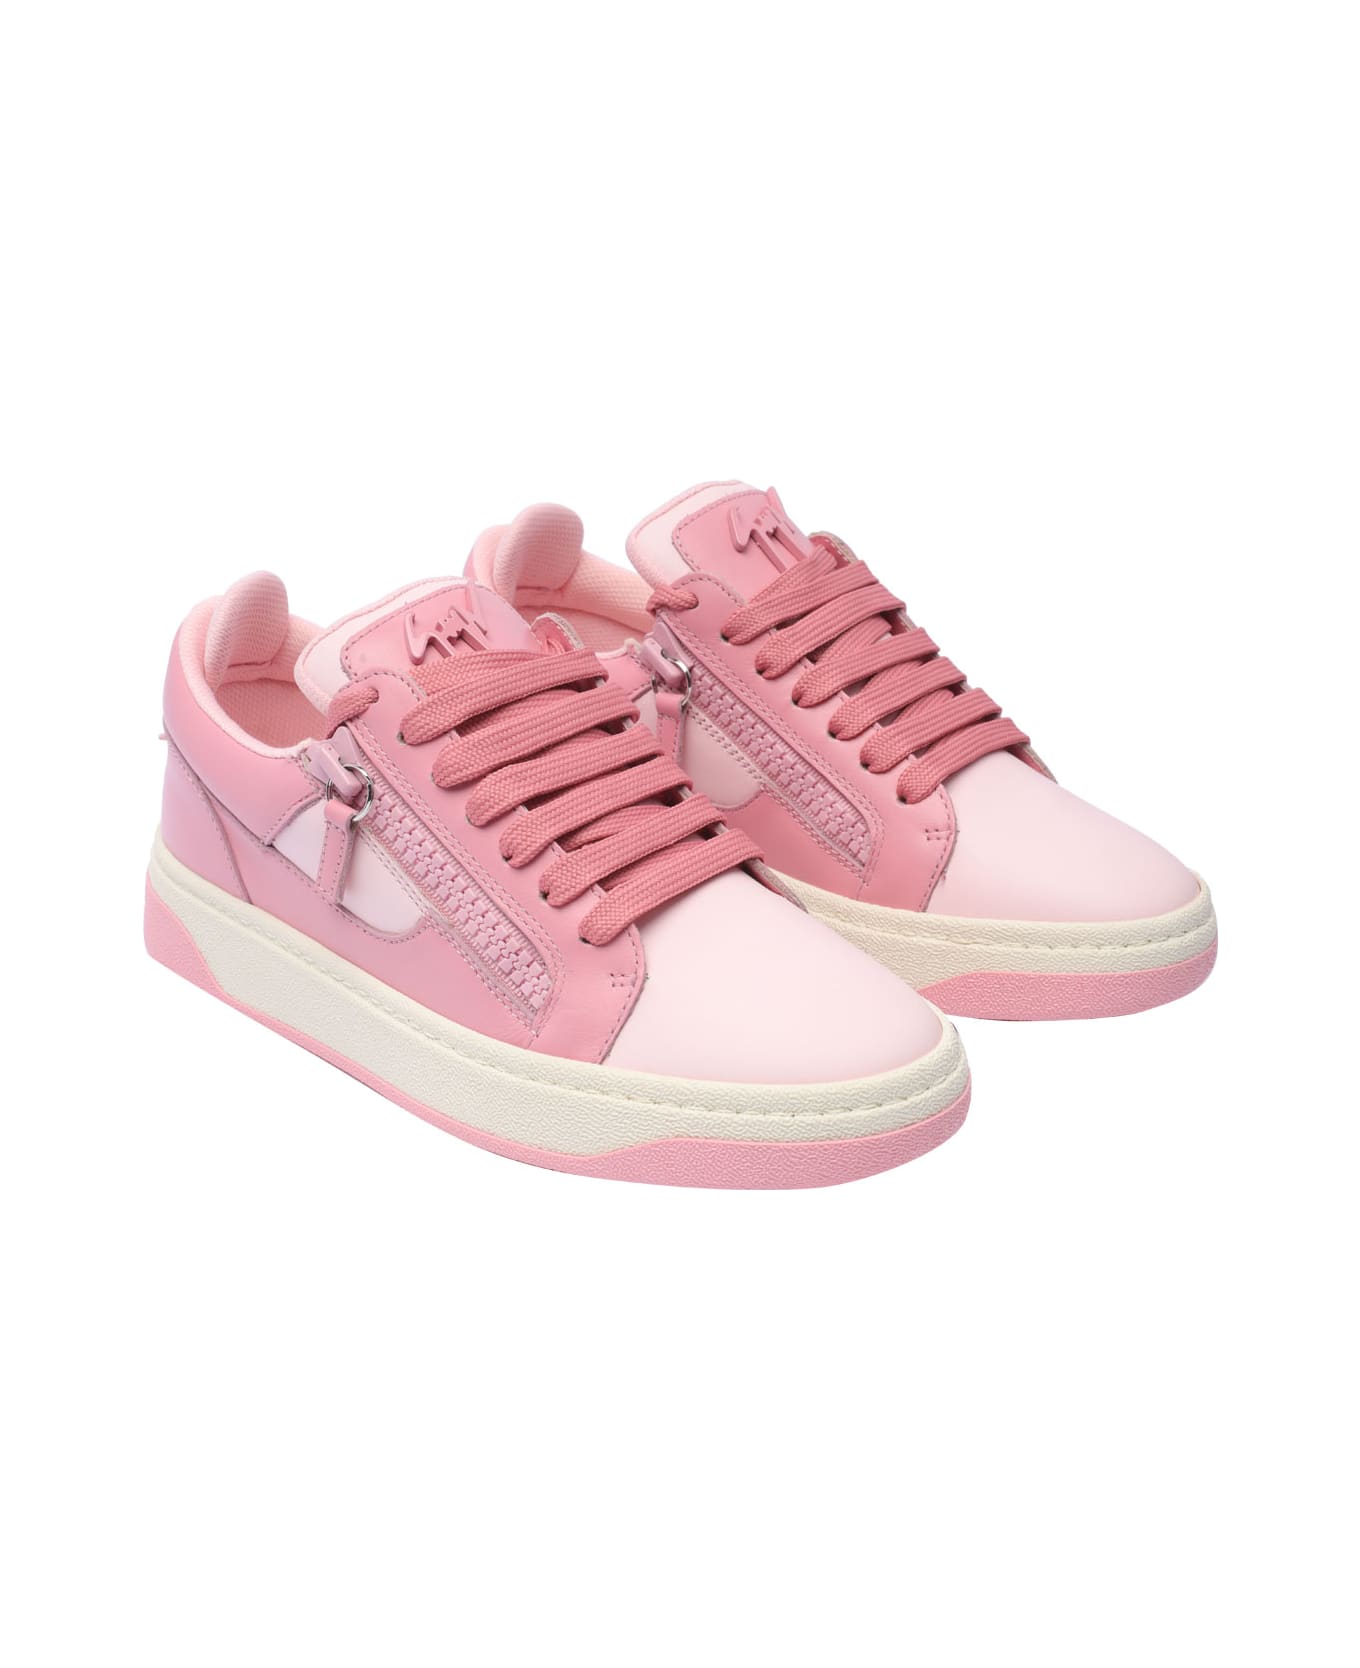 Giuseppe Zanotti Gz94 Sneakers - Pink スニーカー